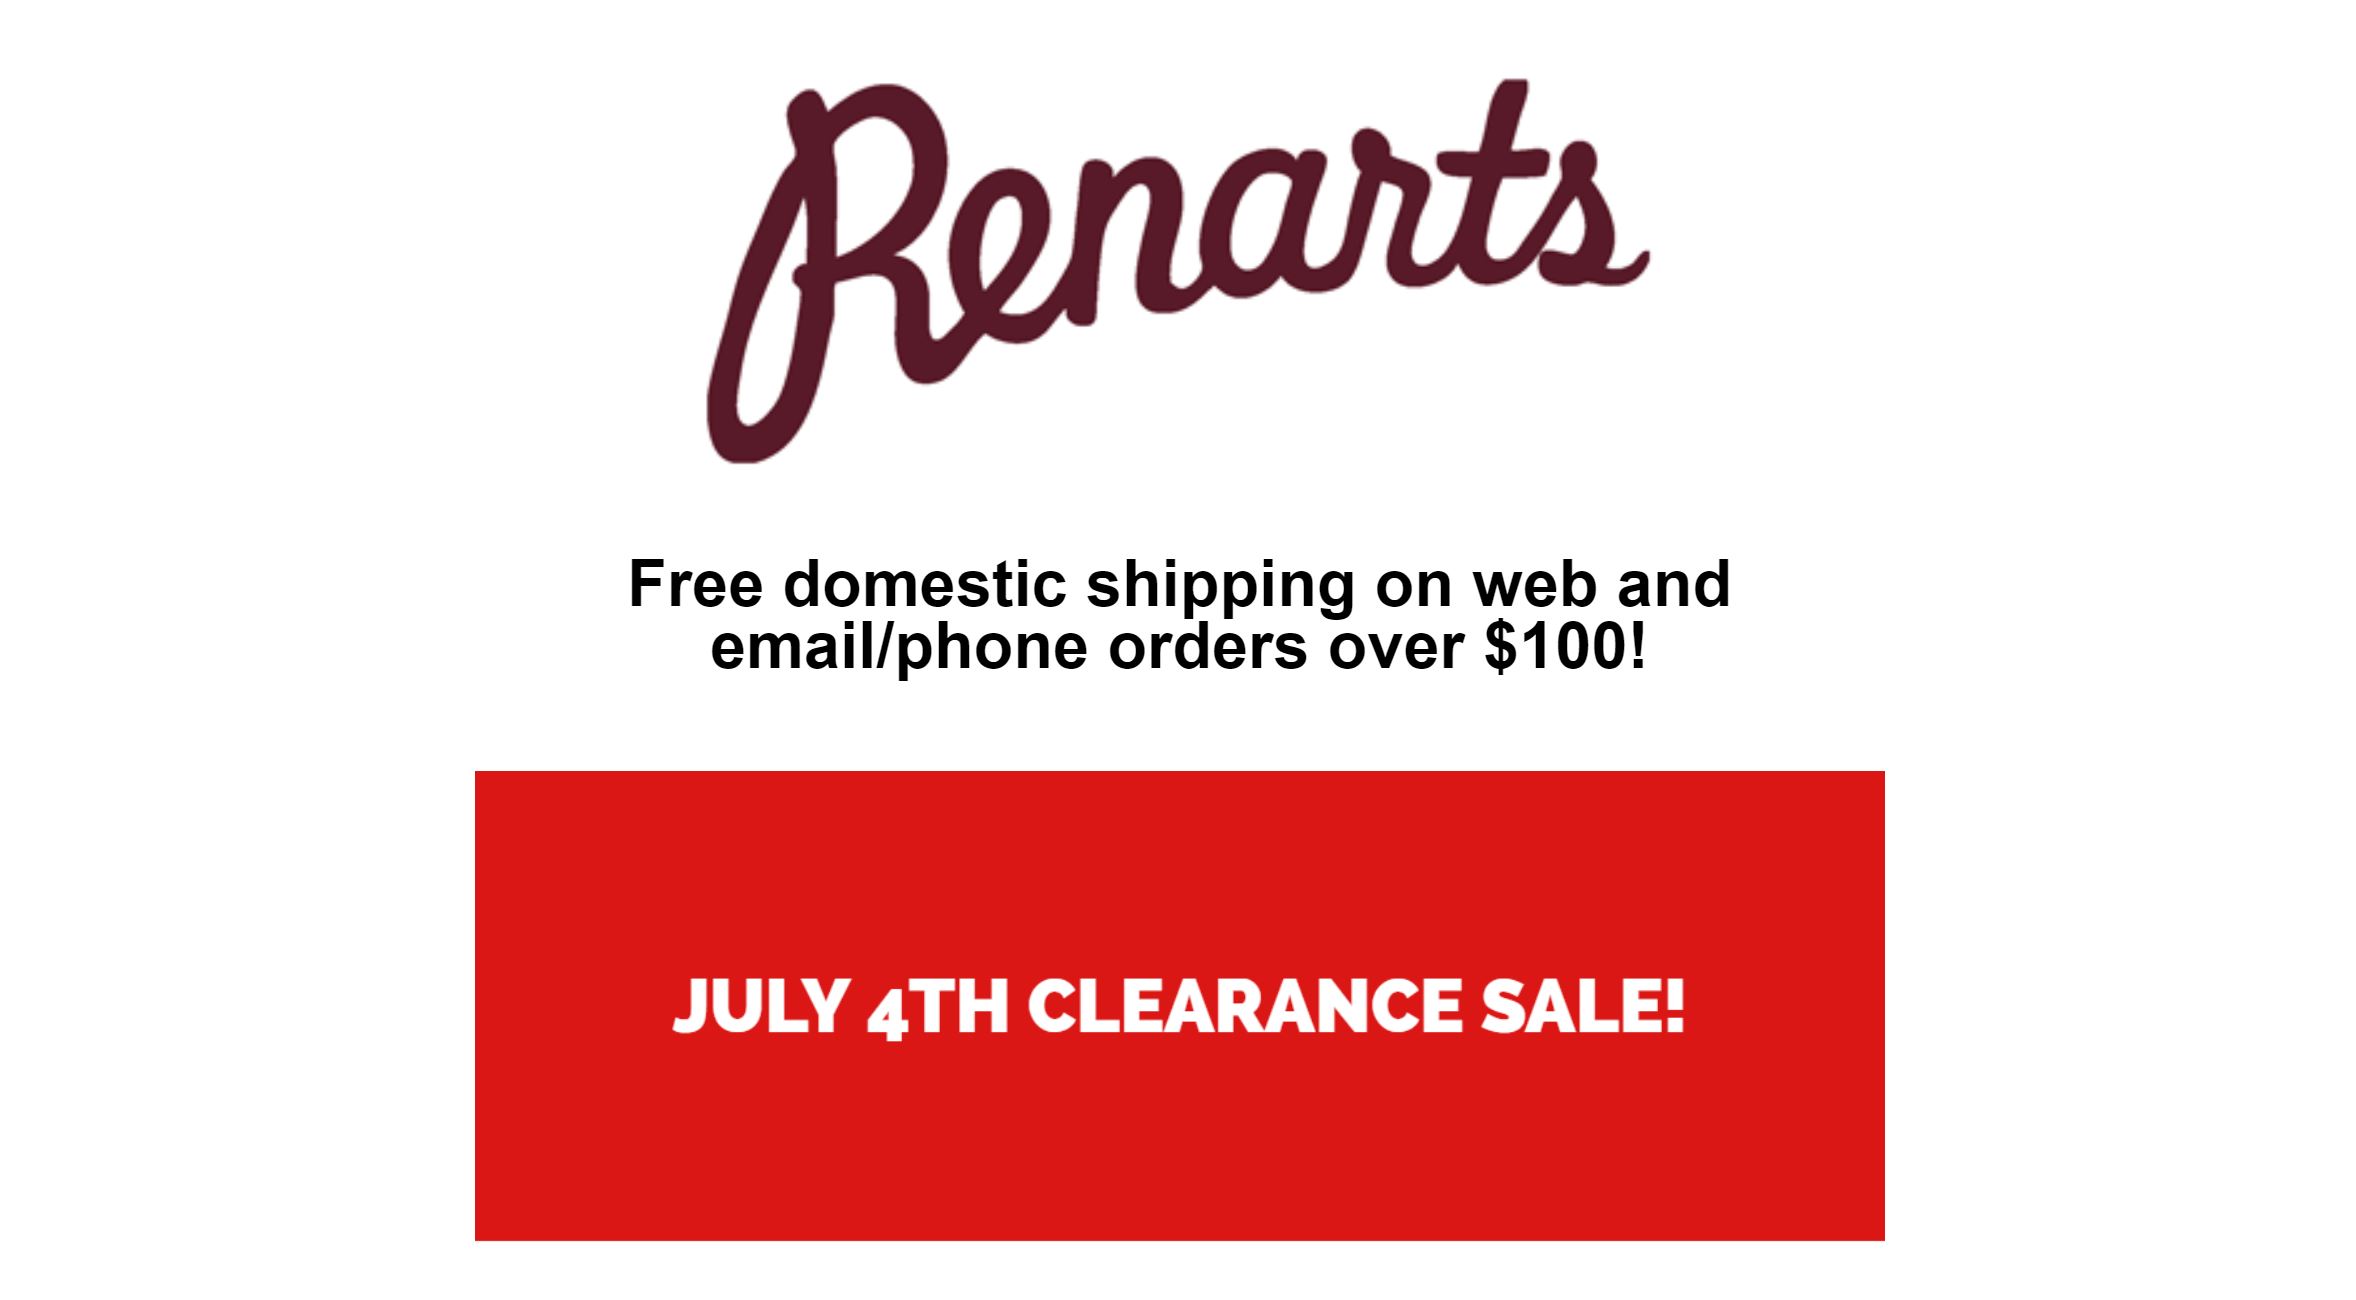 renarts 4th of july sale